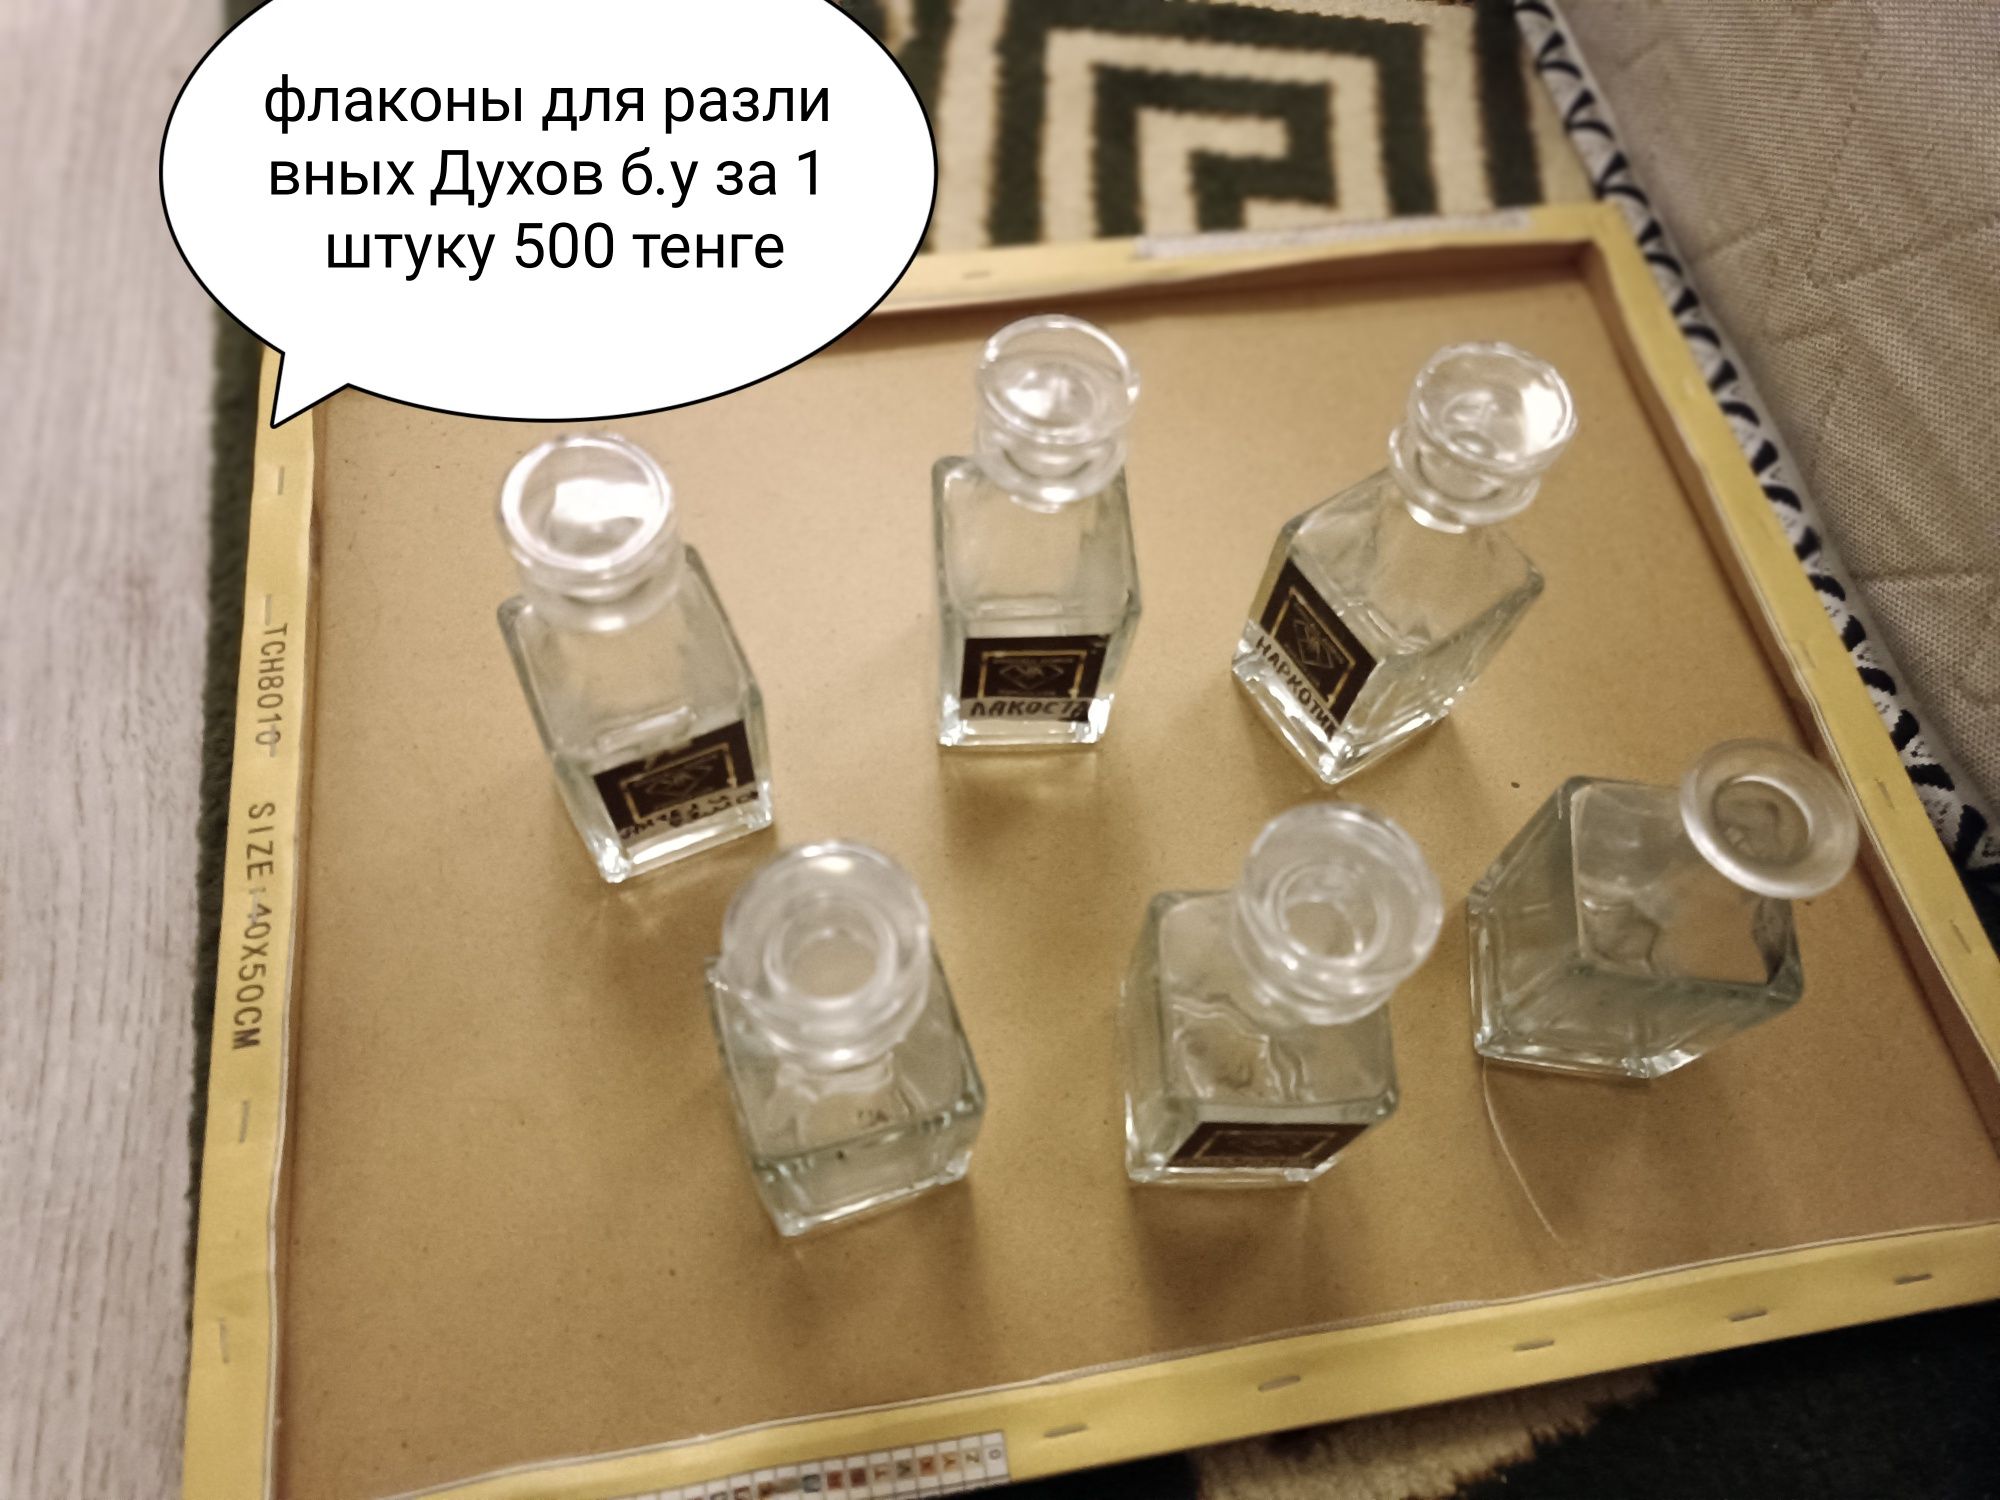 Распродажа парфюмерии и флаконов